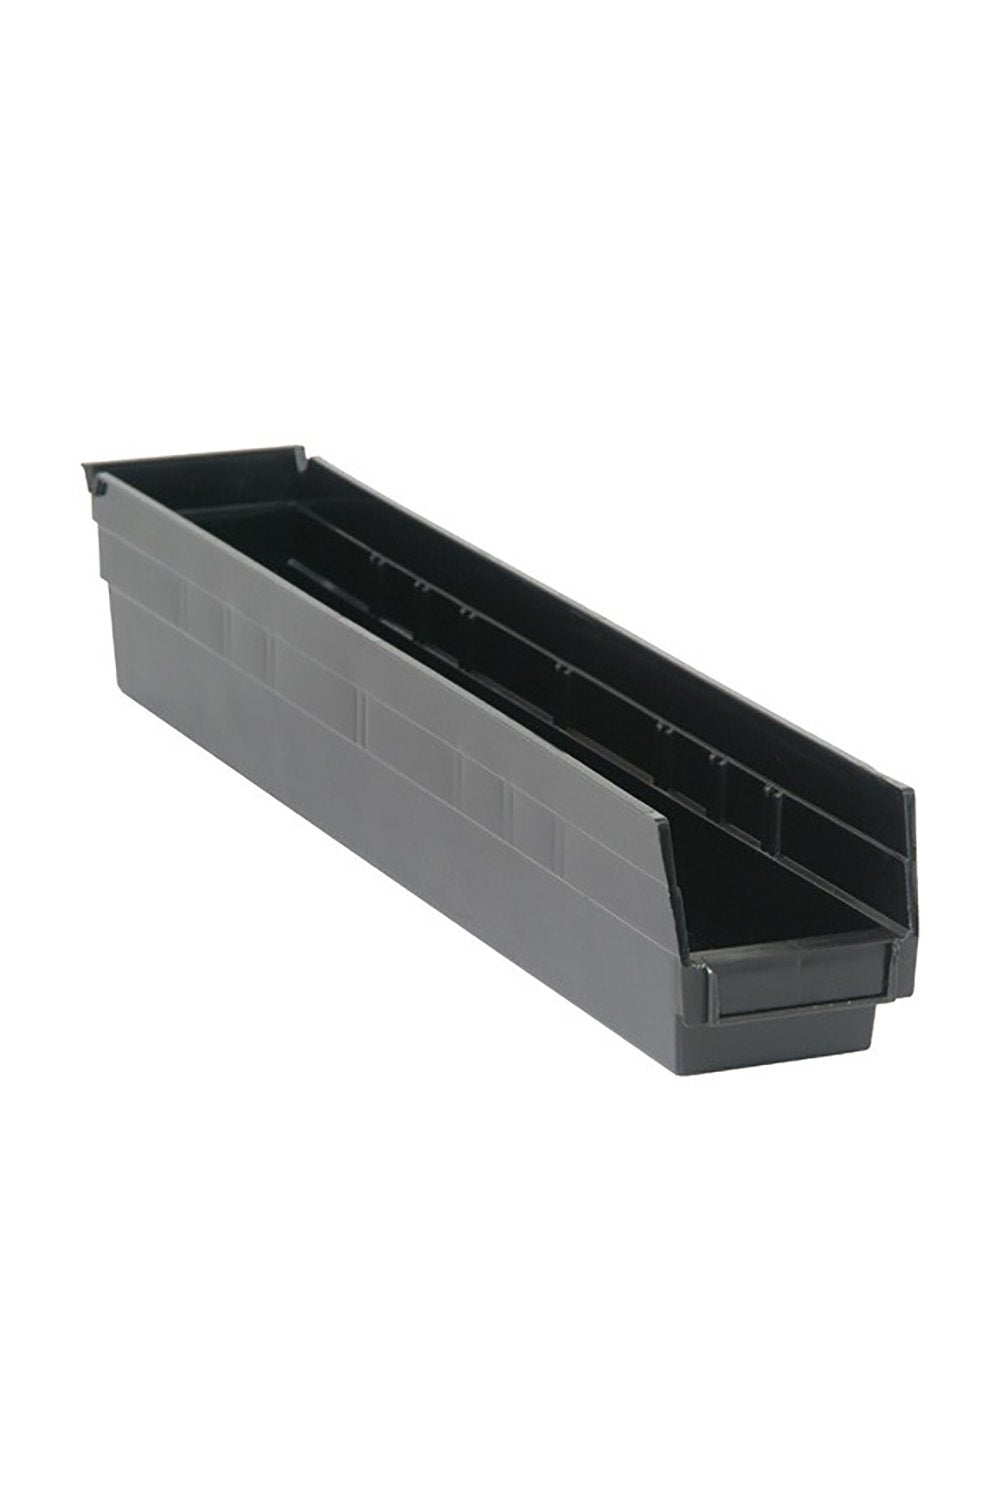 Recycled Shelf Bin Bins & Containers Acart 23-5/8'' x 4-1/8'' x 4'' Black 